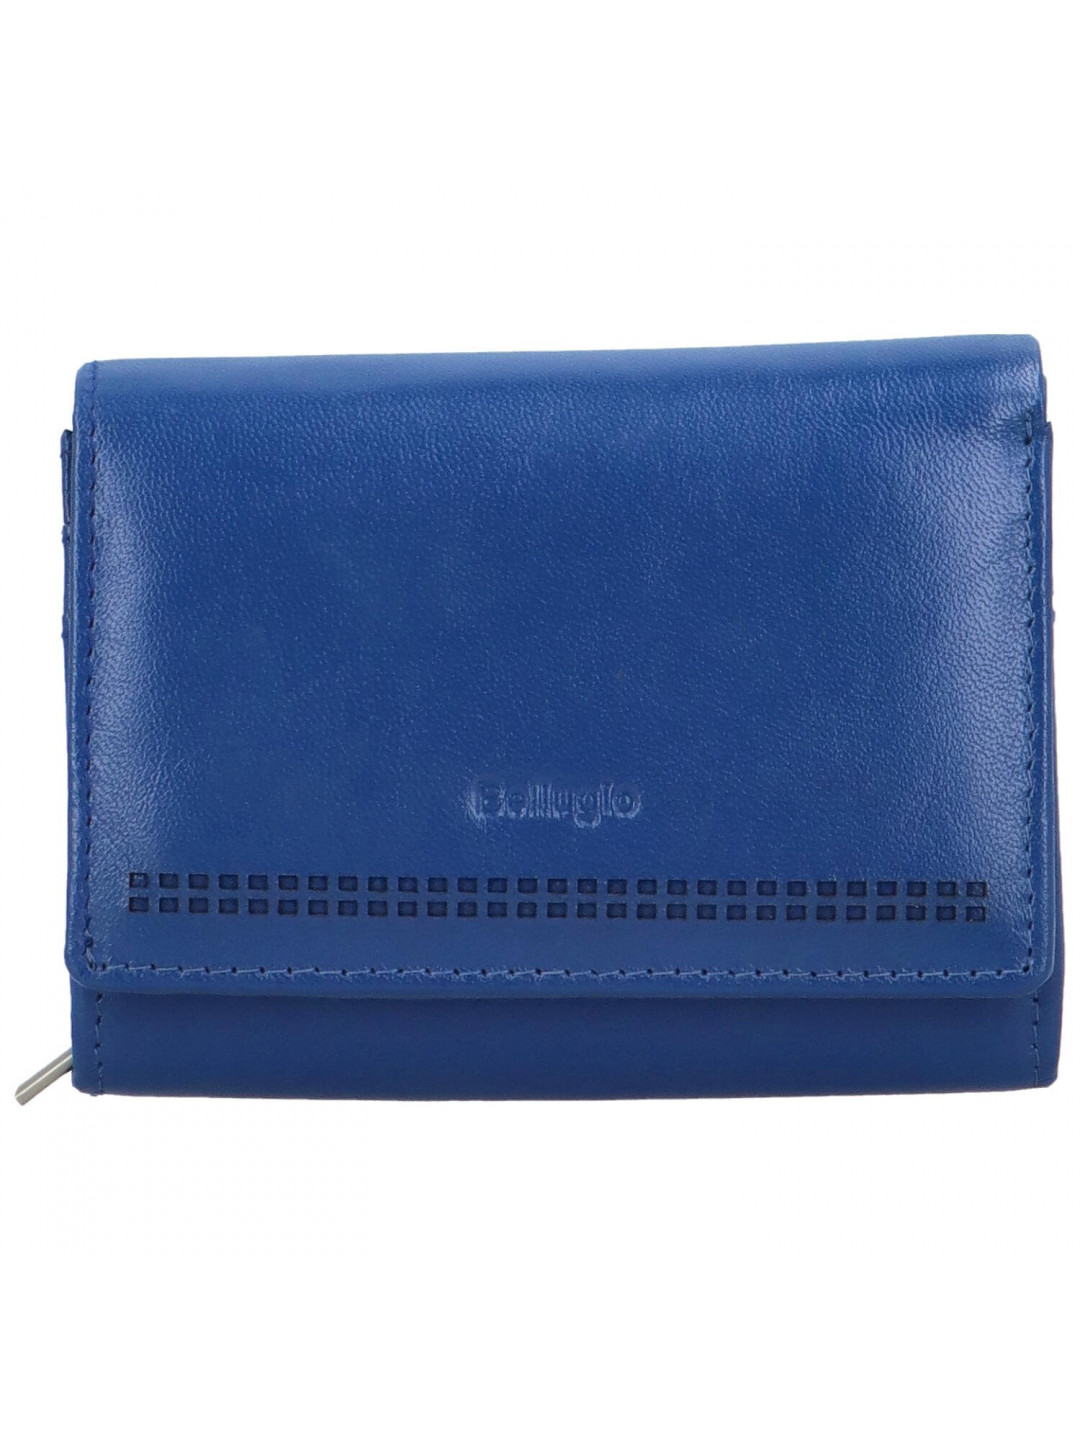 Dámská kožená peněženka tmavě modrá – Bellugio Glorgia